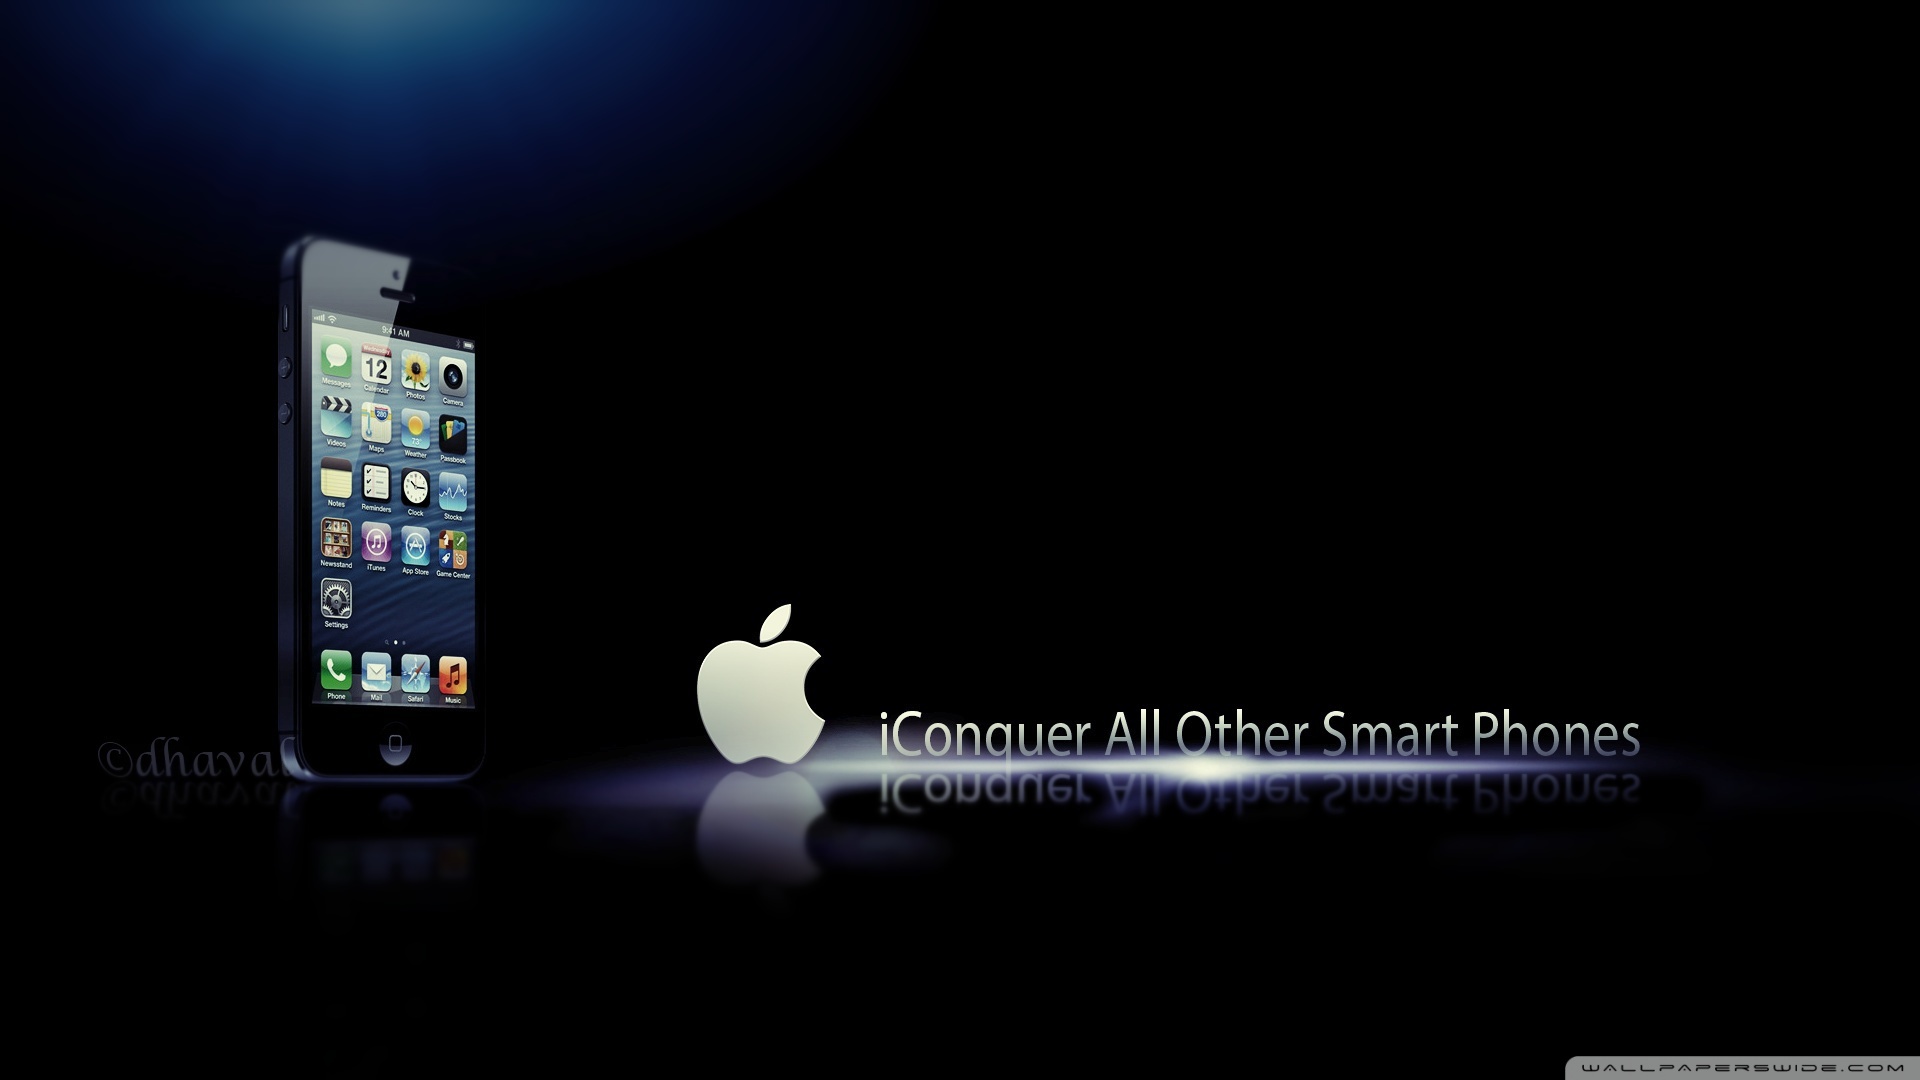 fondo de pantalla original de iphone 5s,electrónica,producto,sistema operativo,artilugio,tecnología